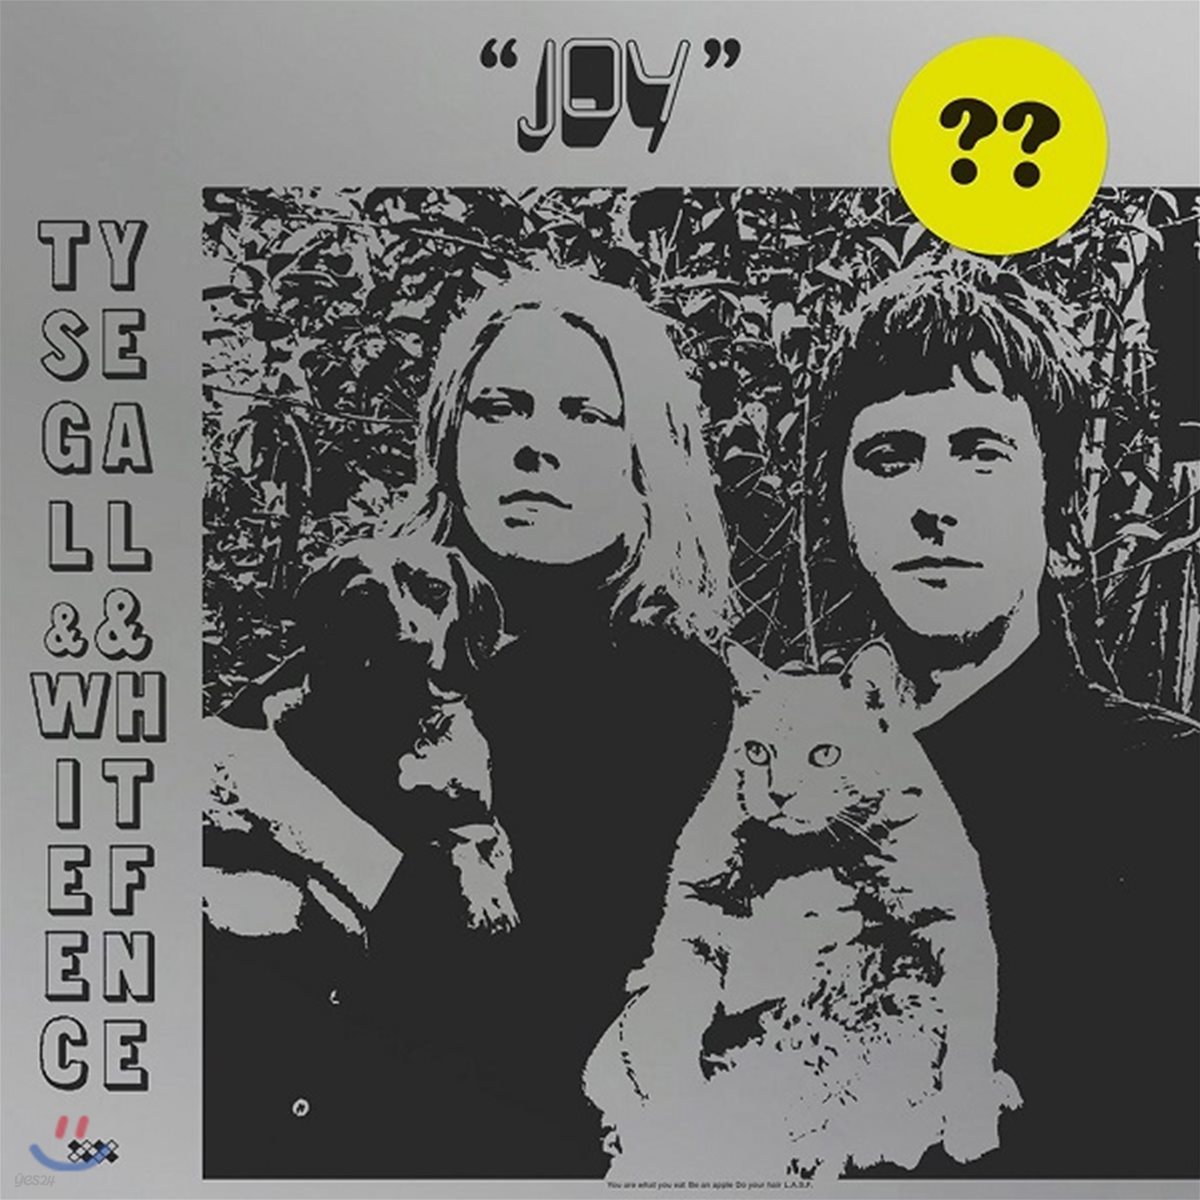 Ty Segall & White Fence (타이 시걸, 화이트 펜스) - Joy